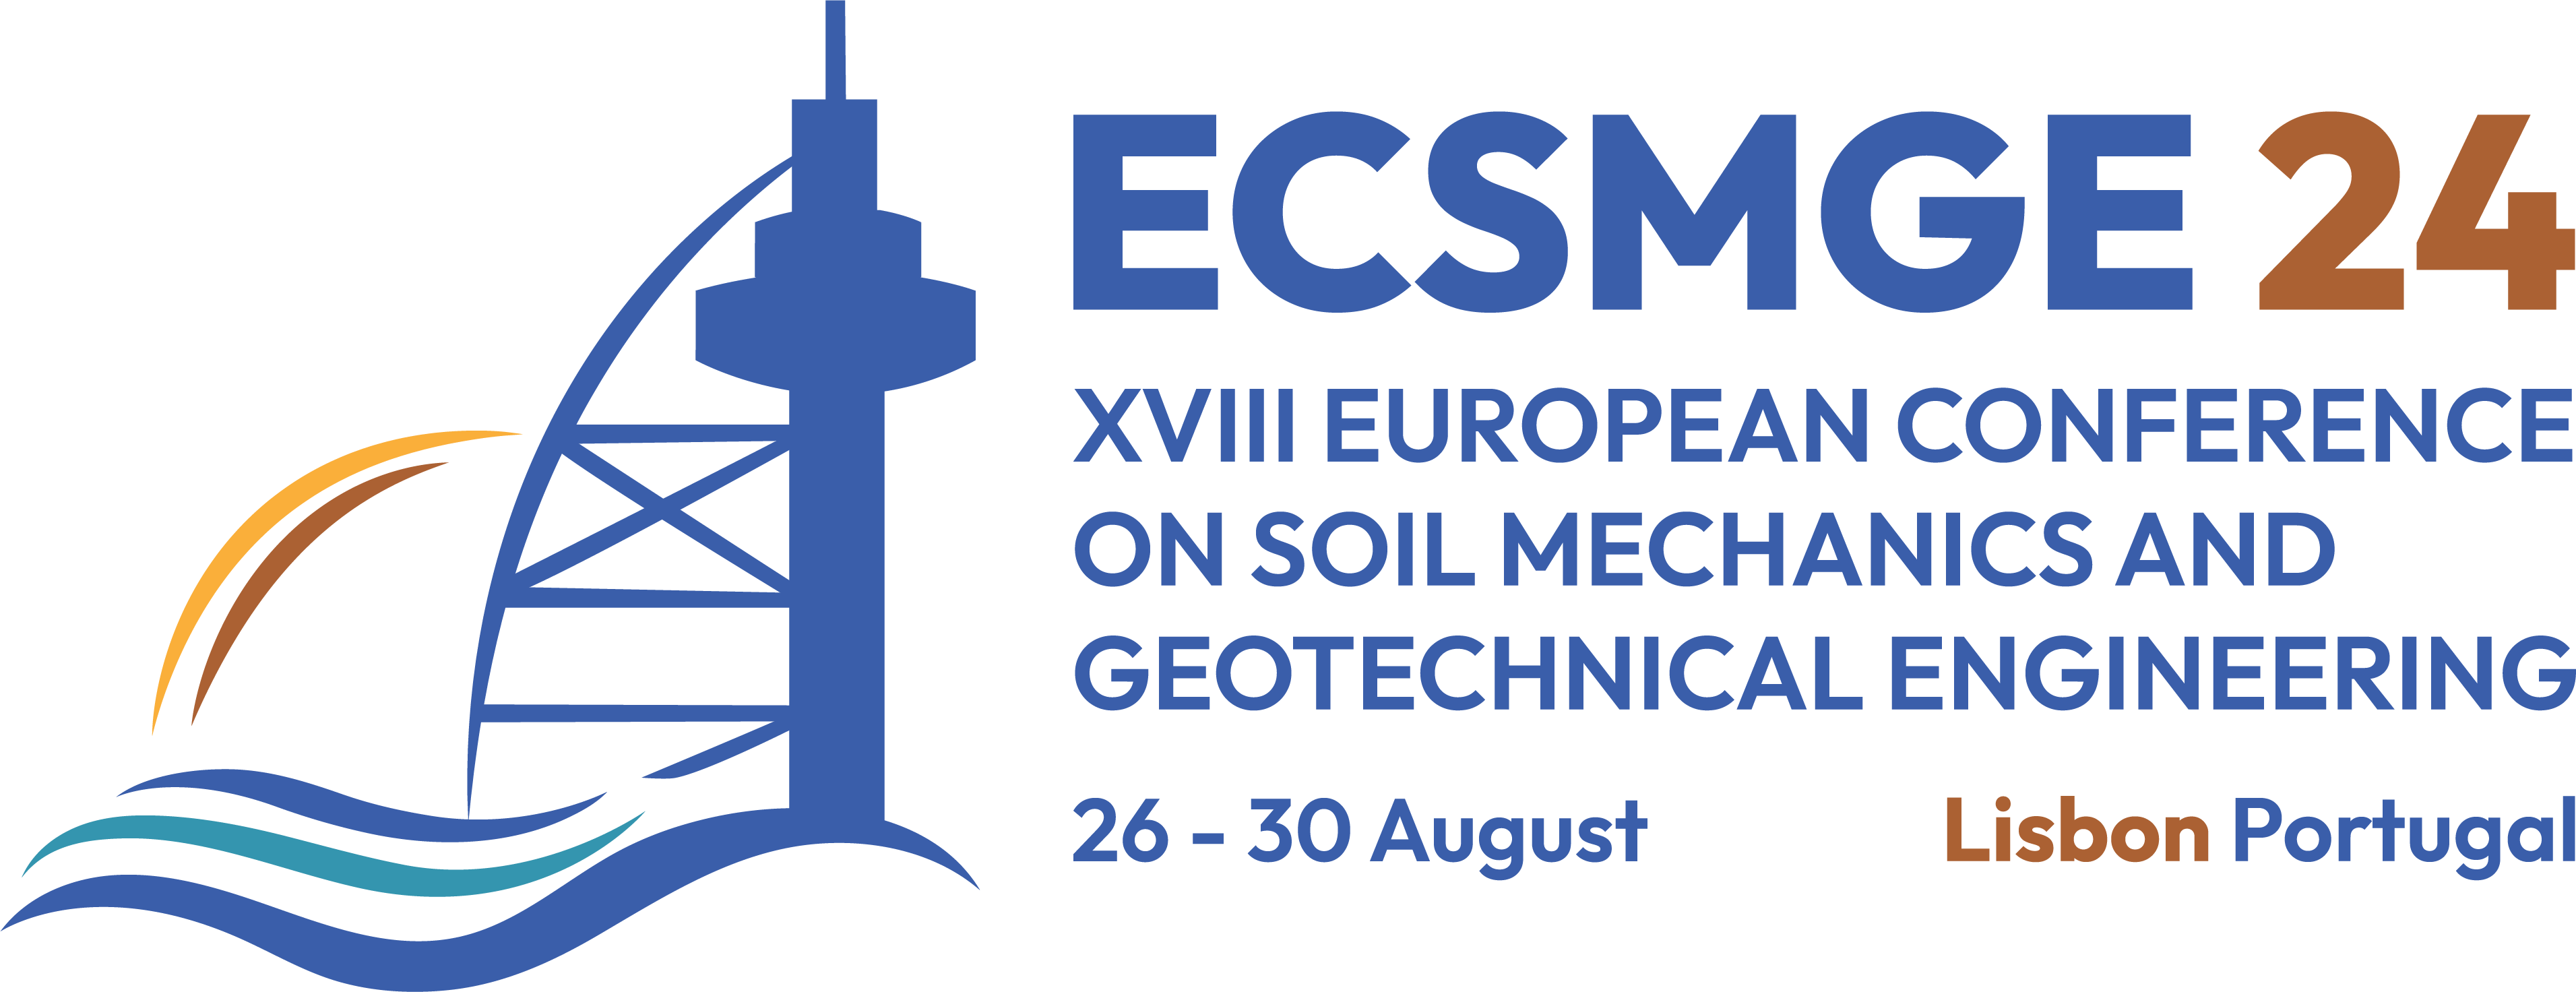 XVIII European Conference on Soil Mechanics and Geotechnical Engineering, Lisbon